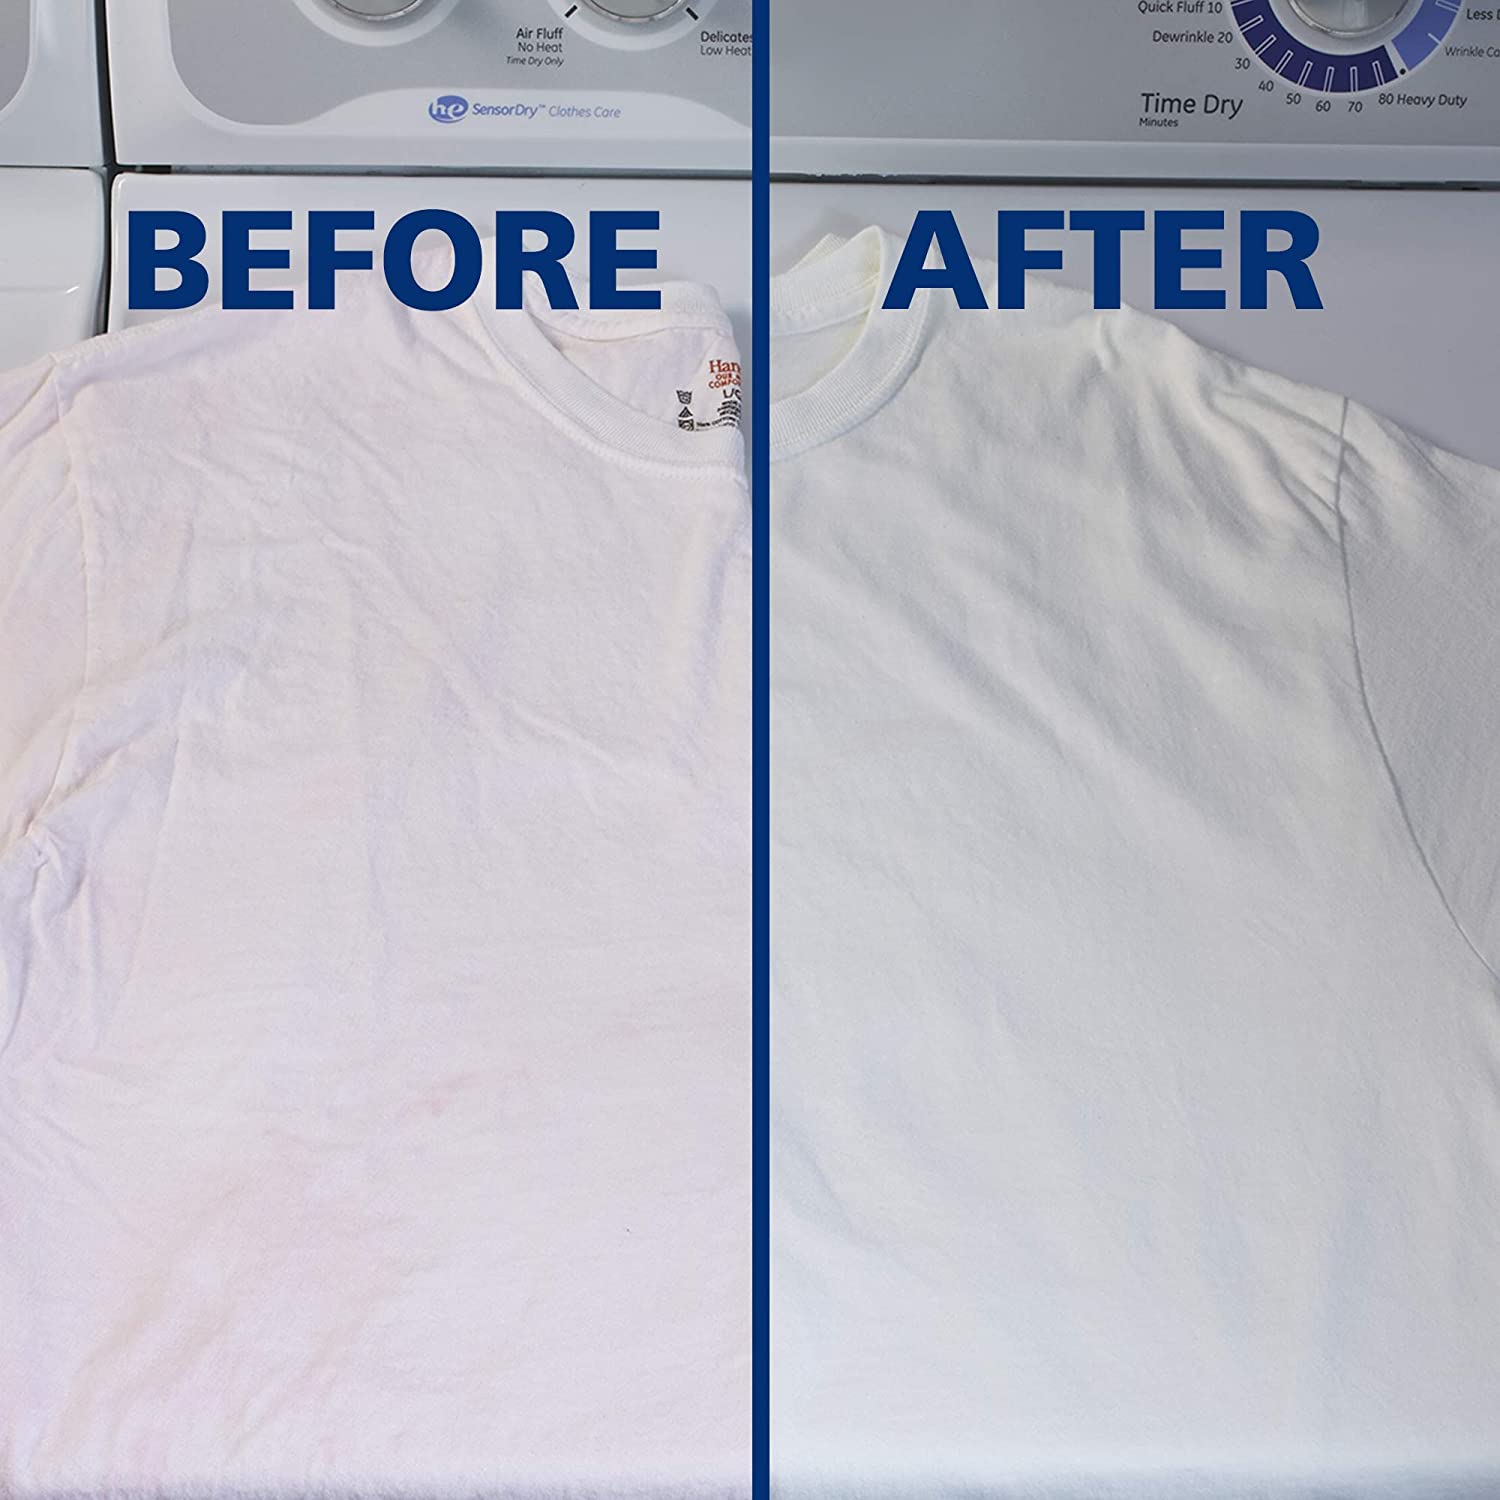 Out White Brite Laundry Whitener Bleach, 12 oz – Rafaelos